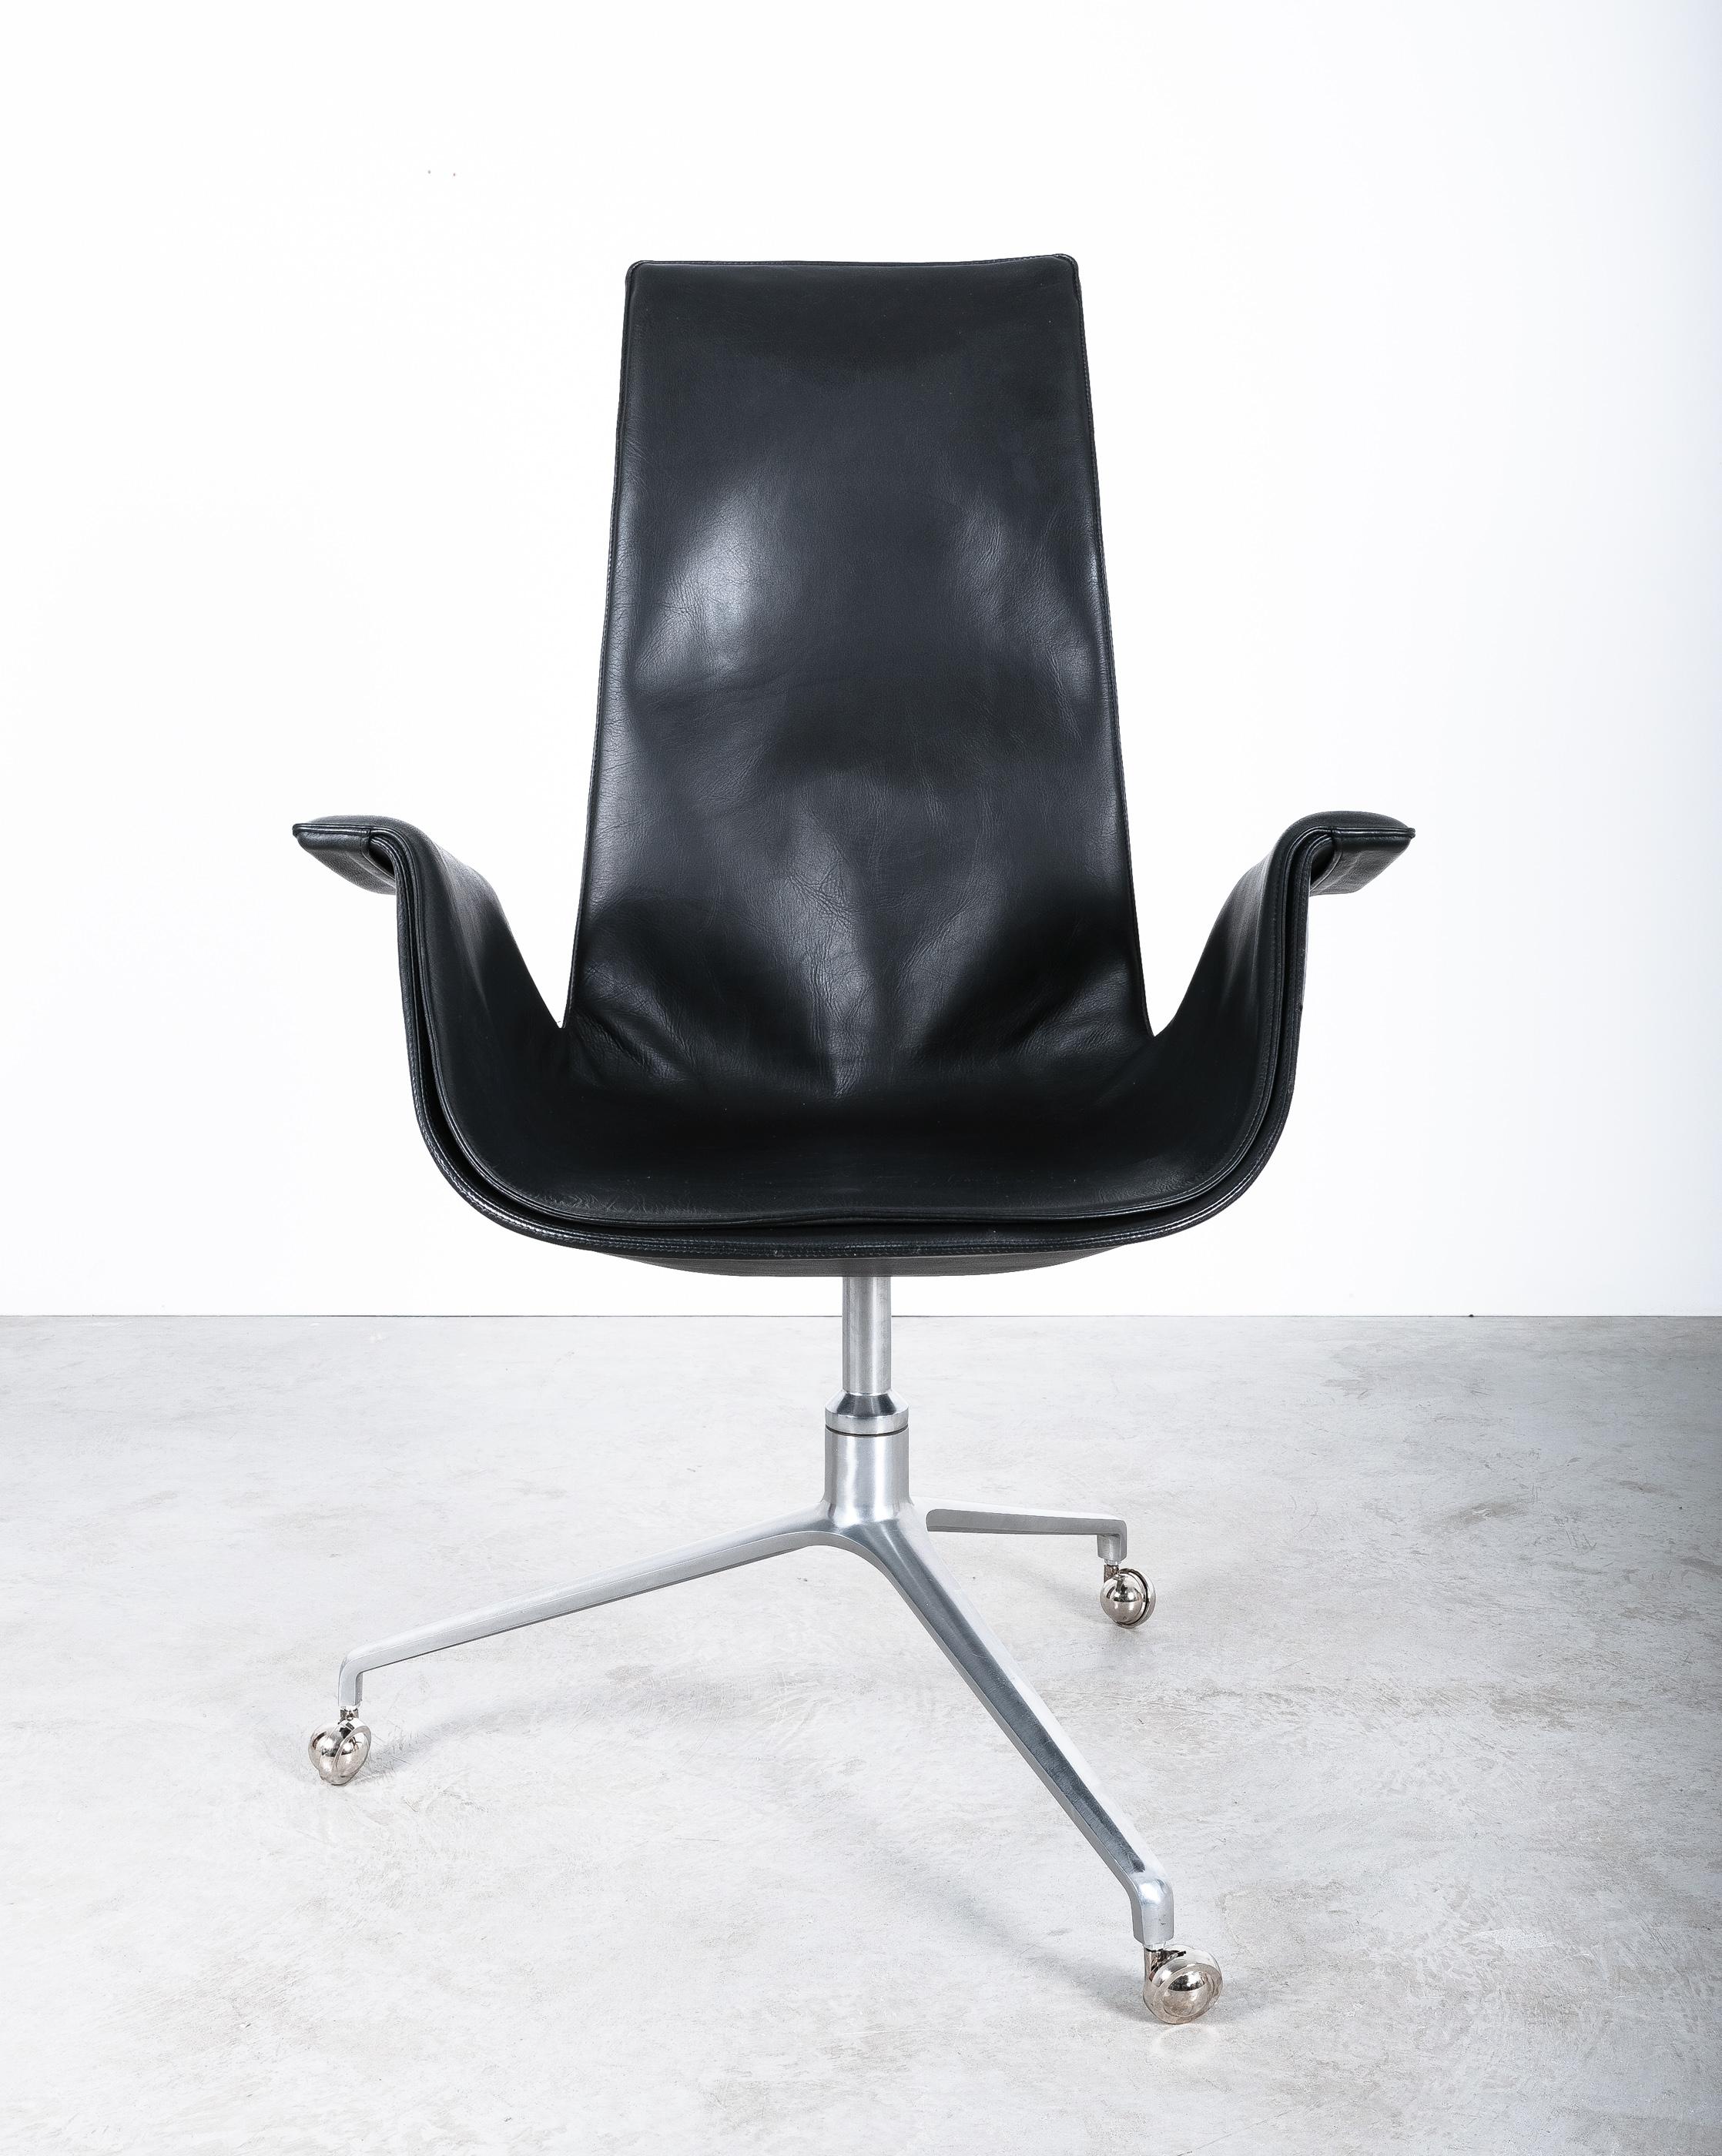 Steel FK 6725 Fabricius and Kastholm Black High Back Bird Desk Chair, 1964